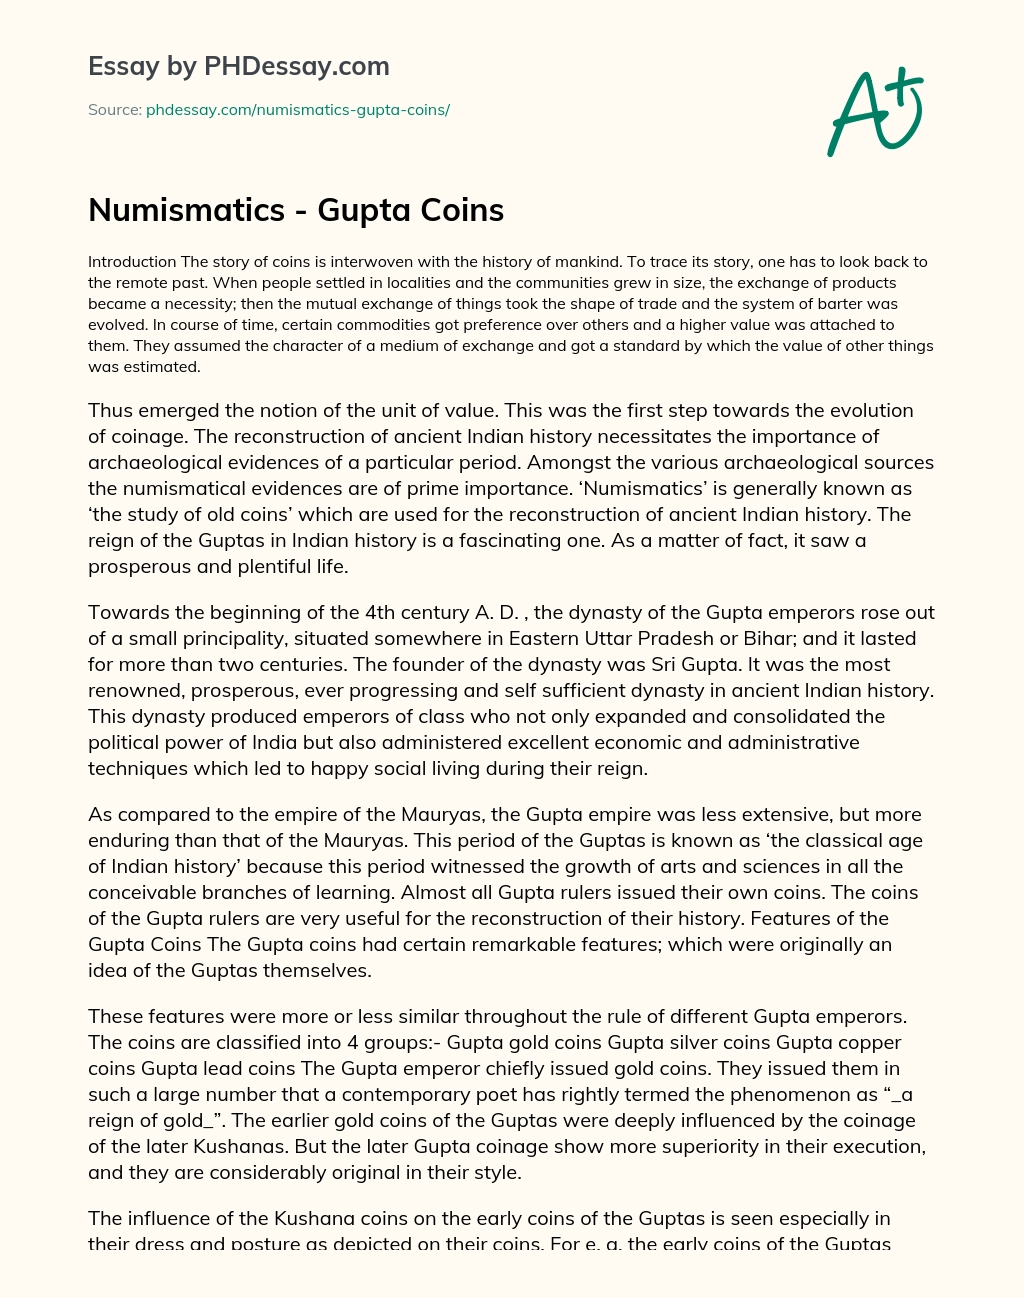 Numismatics – Gupta Coins essay